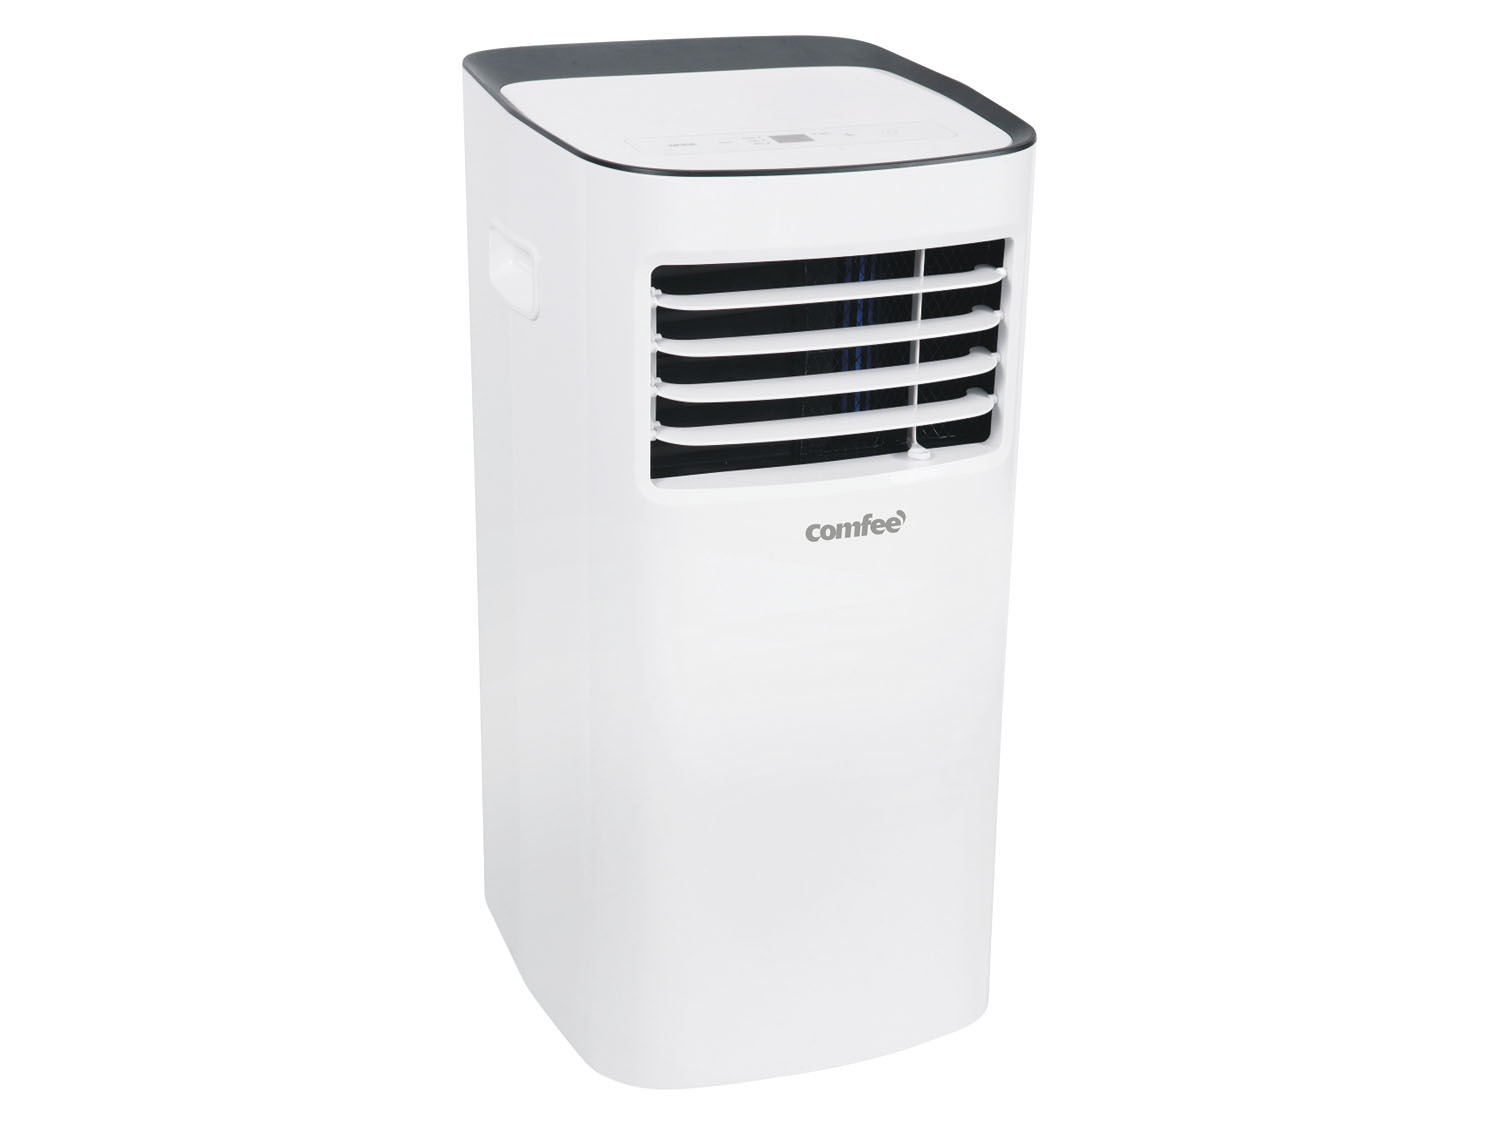 Comfee Mobiles Klimagerät »Smart Cool 7000-1«, 43 l/Ta…